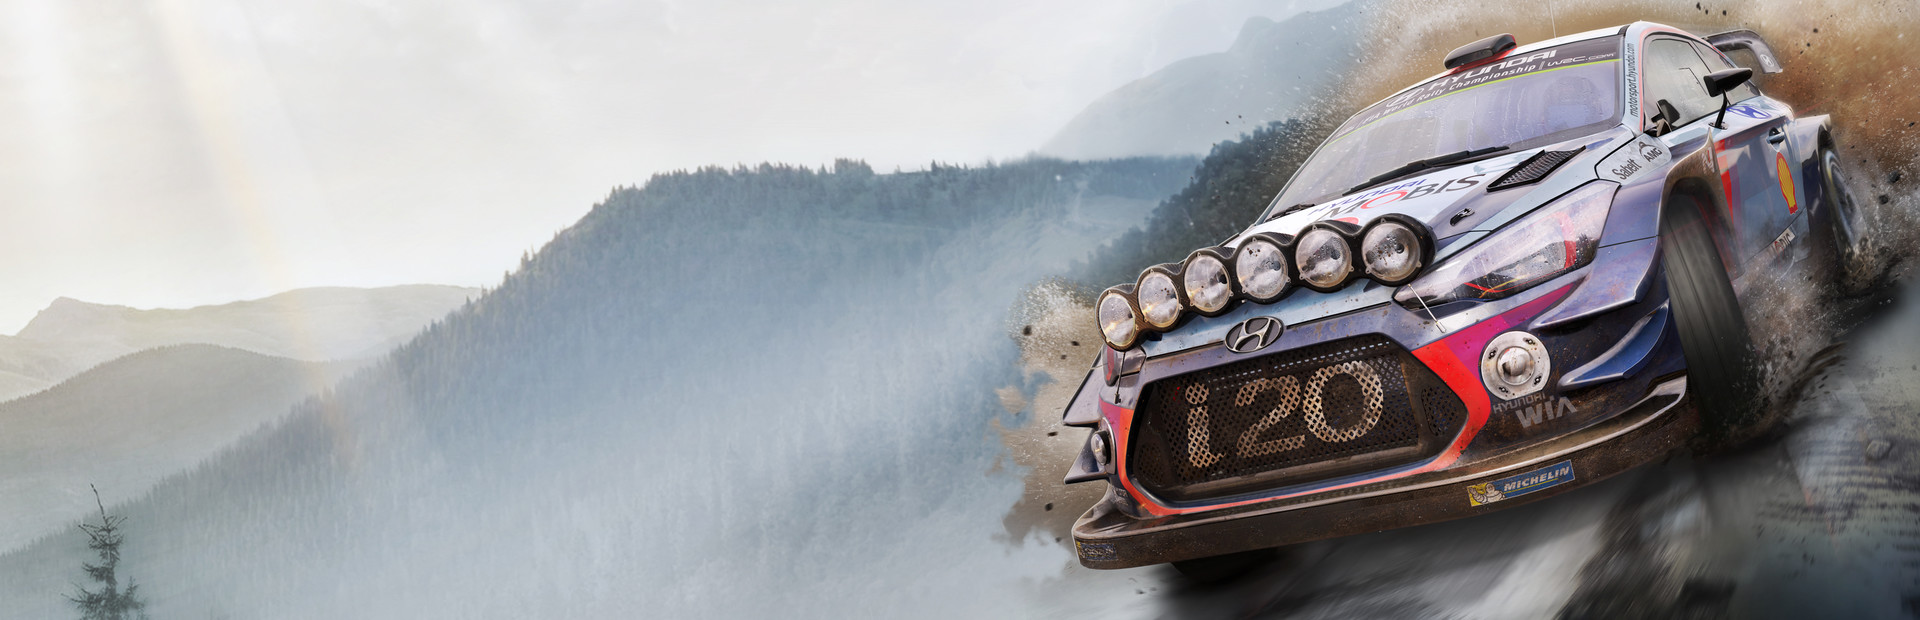 WRC 7 FIA World Rally Championship cover image